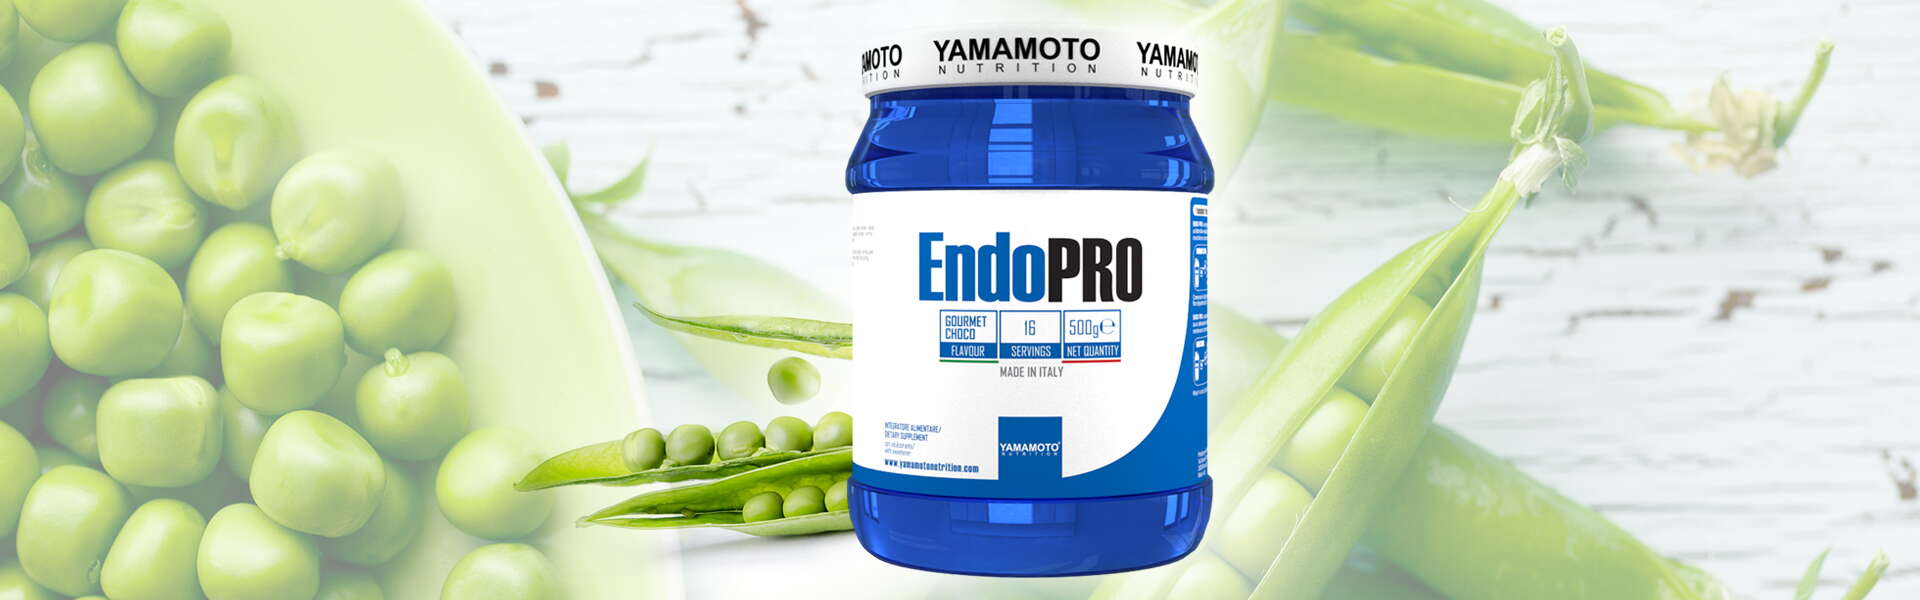 EndoPRO: le 'Green Proteine'